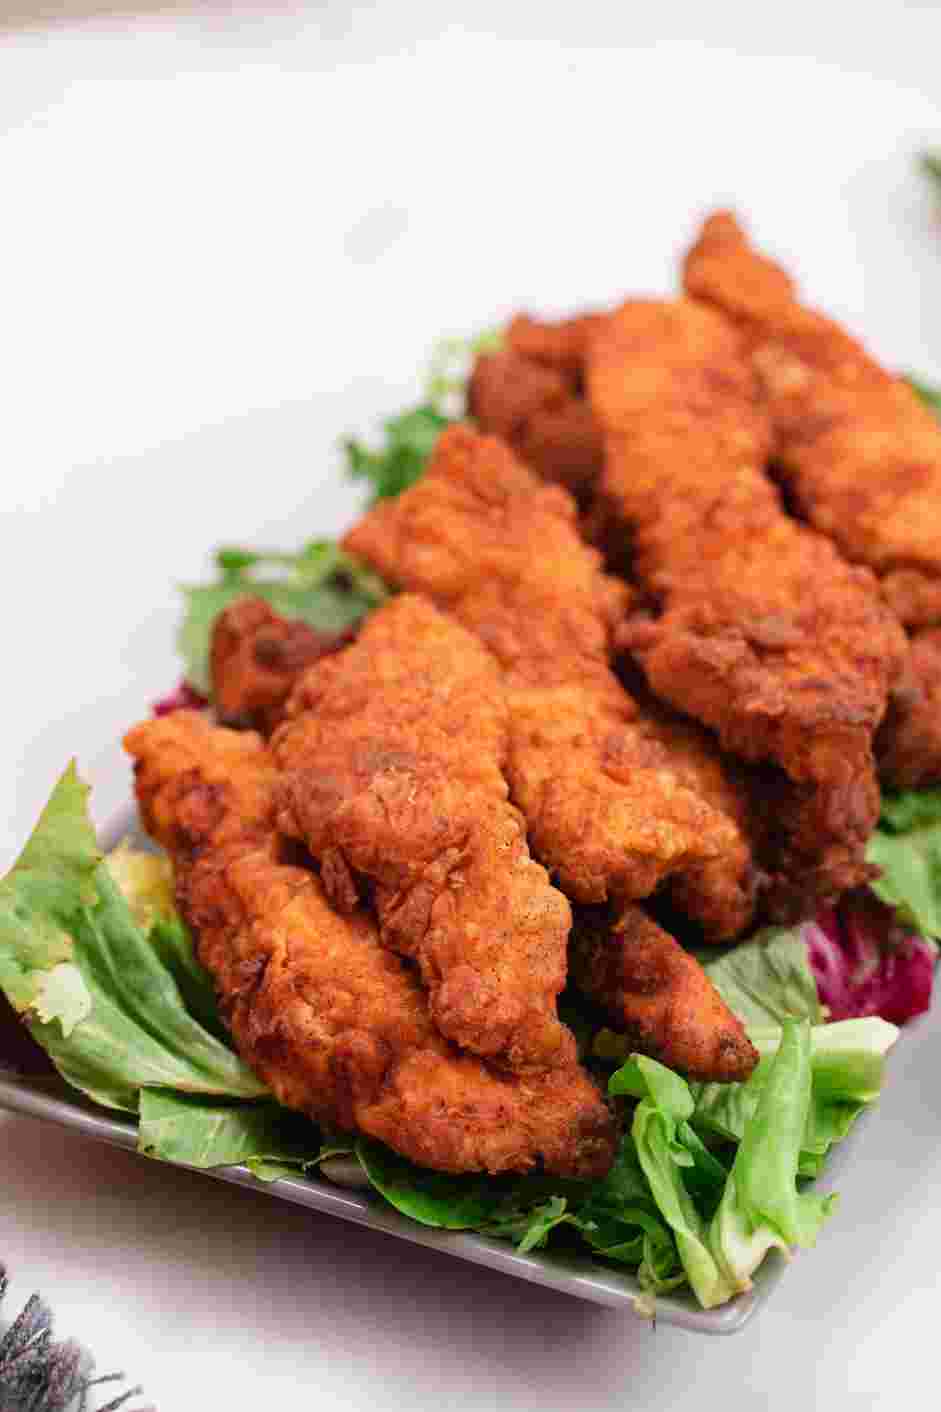 Buttermilk Chicken Tenders Recipe: Serve the buttermilk chicken tenders with ketchup or your favorite barbecue sauce.